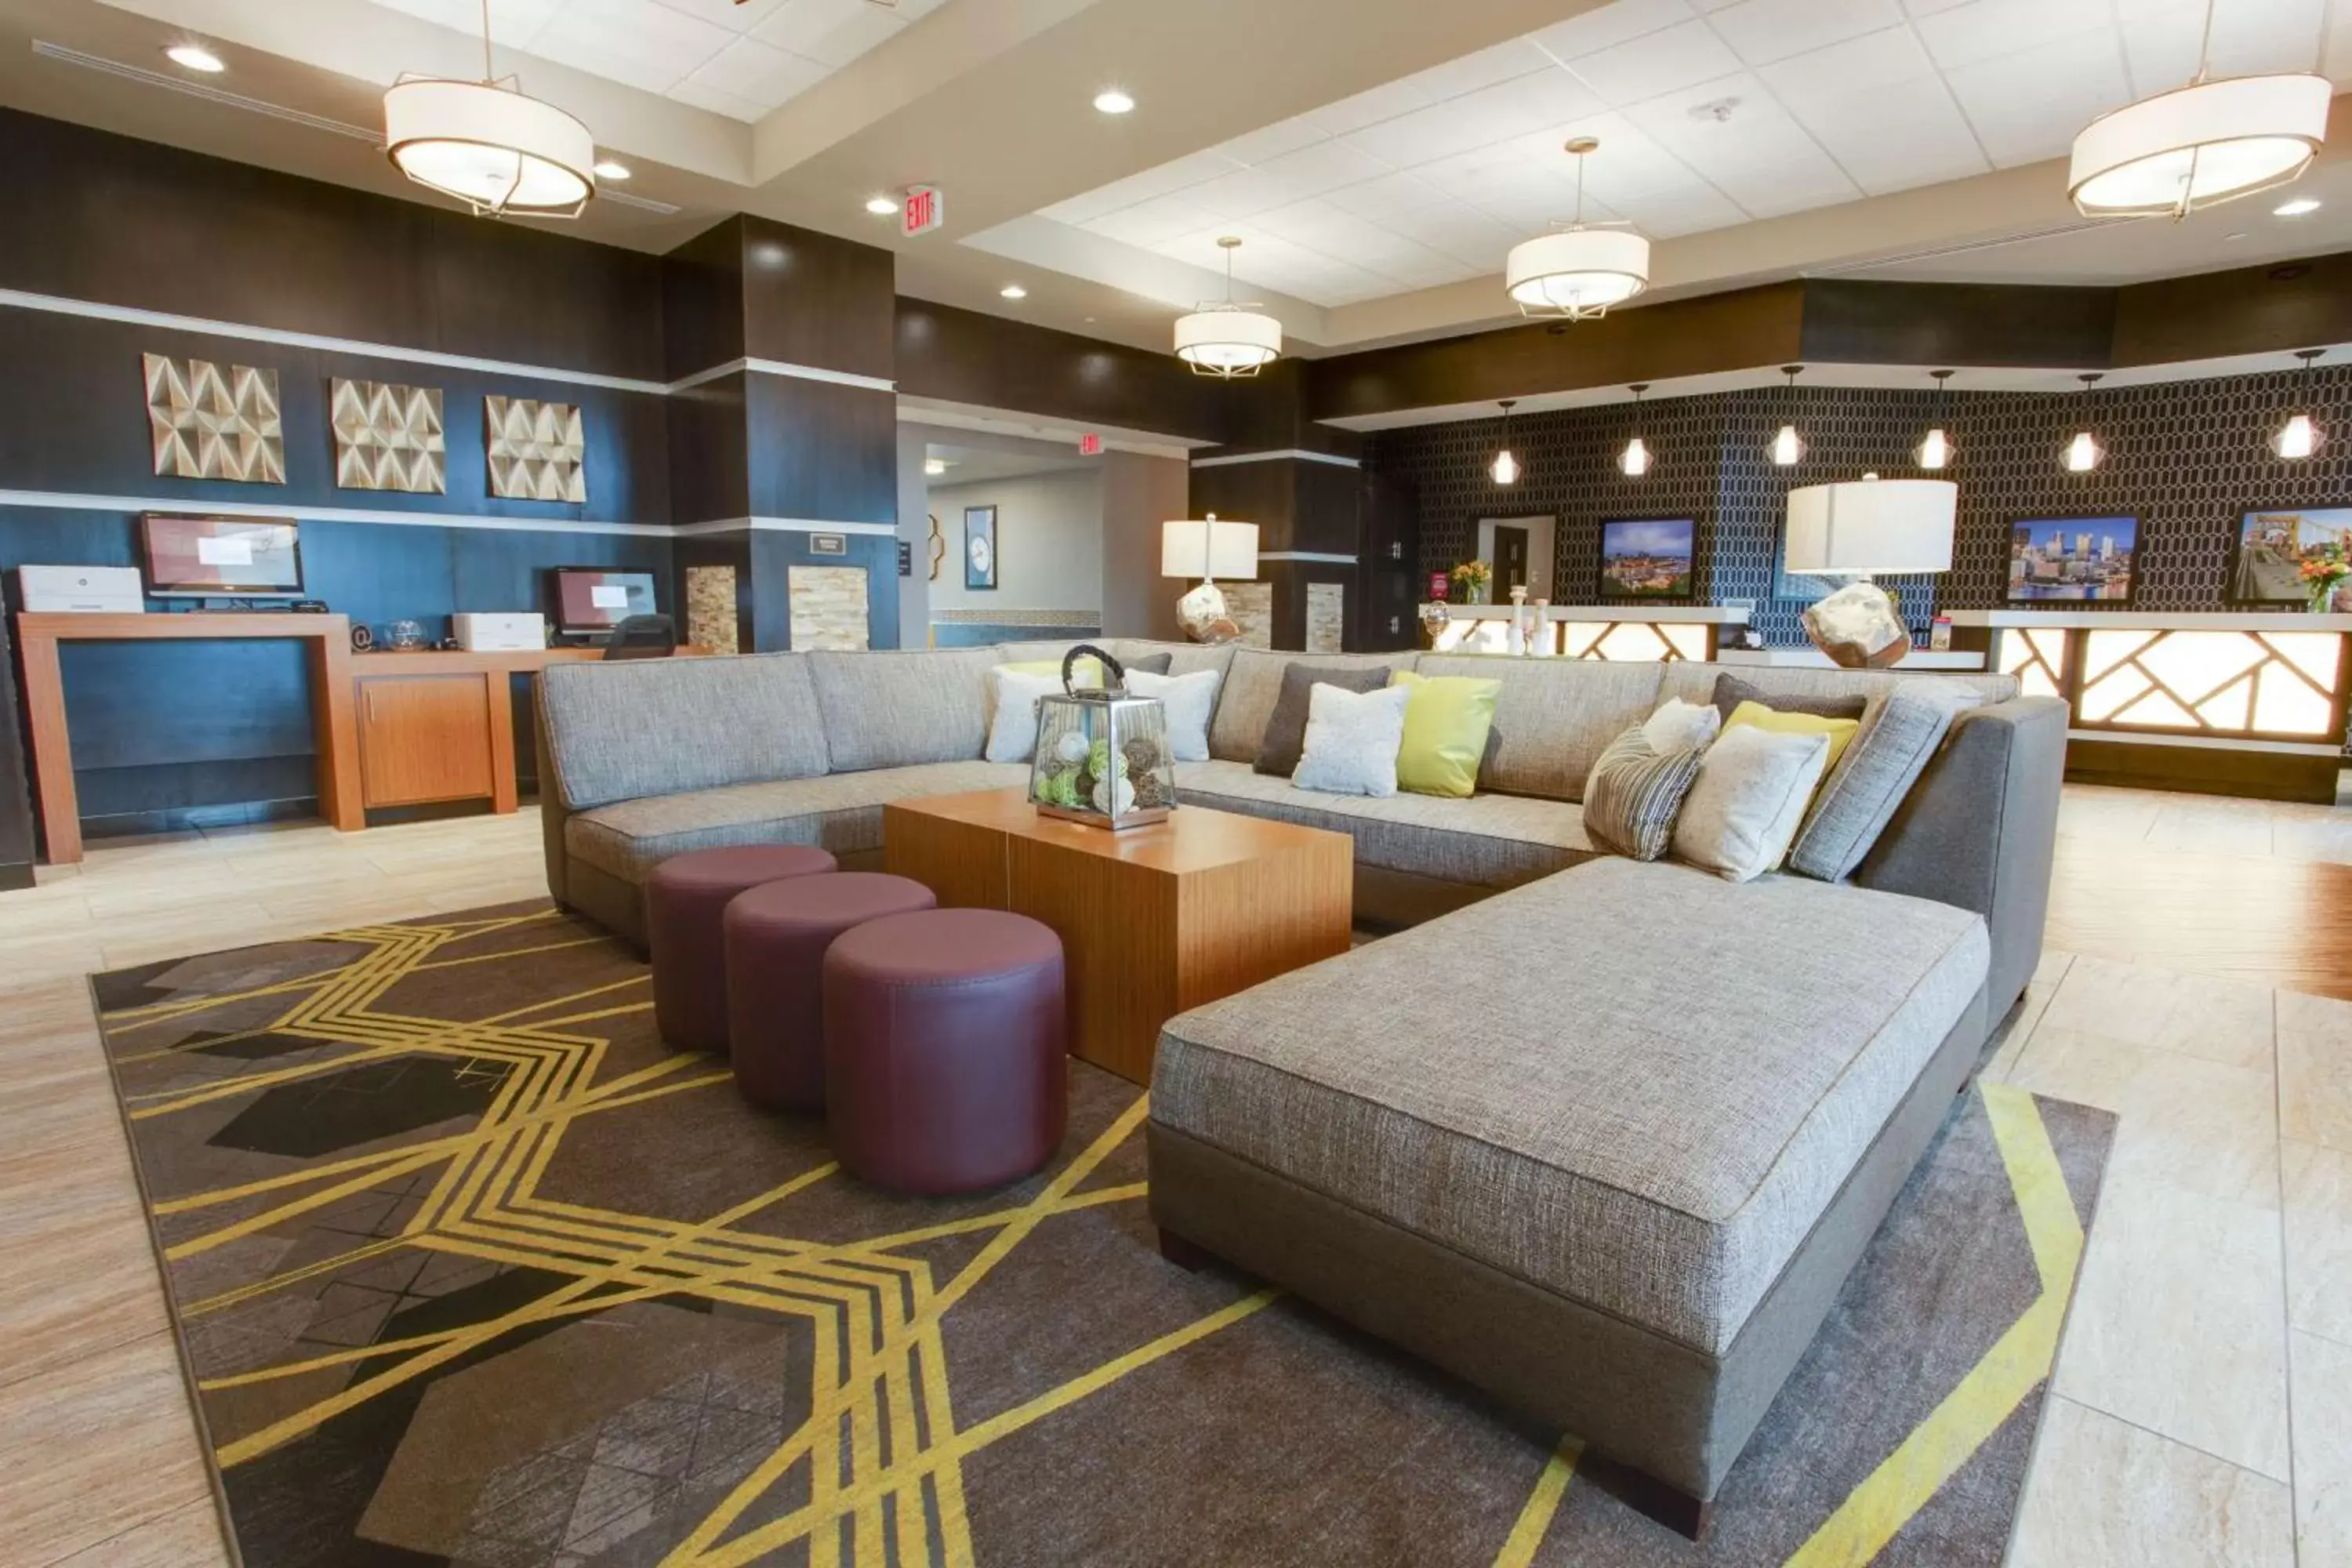 Lobby or reception in Drury Inn & Suites Pittsburgh Airport Settlers Ridge